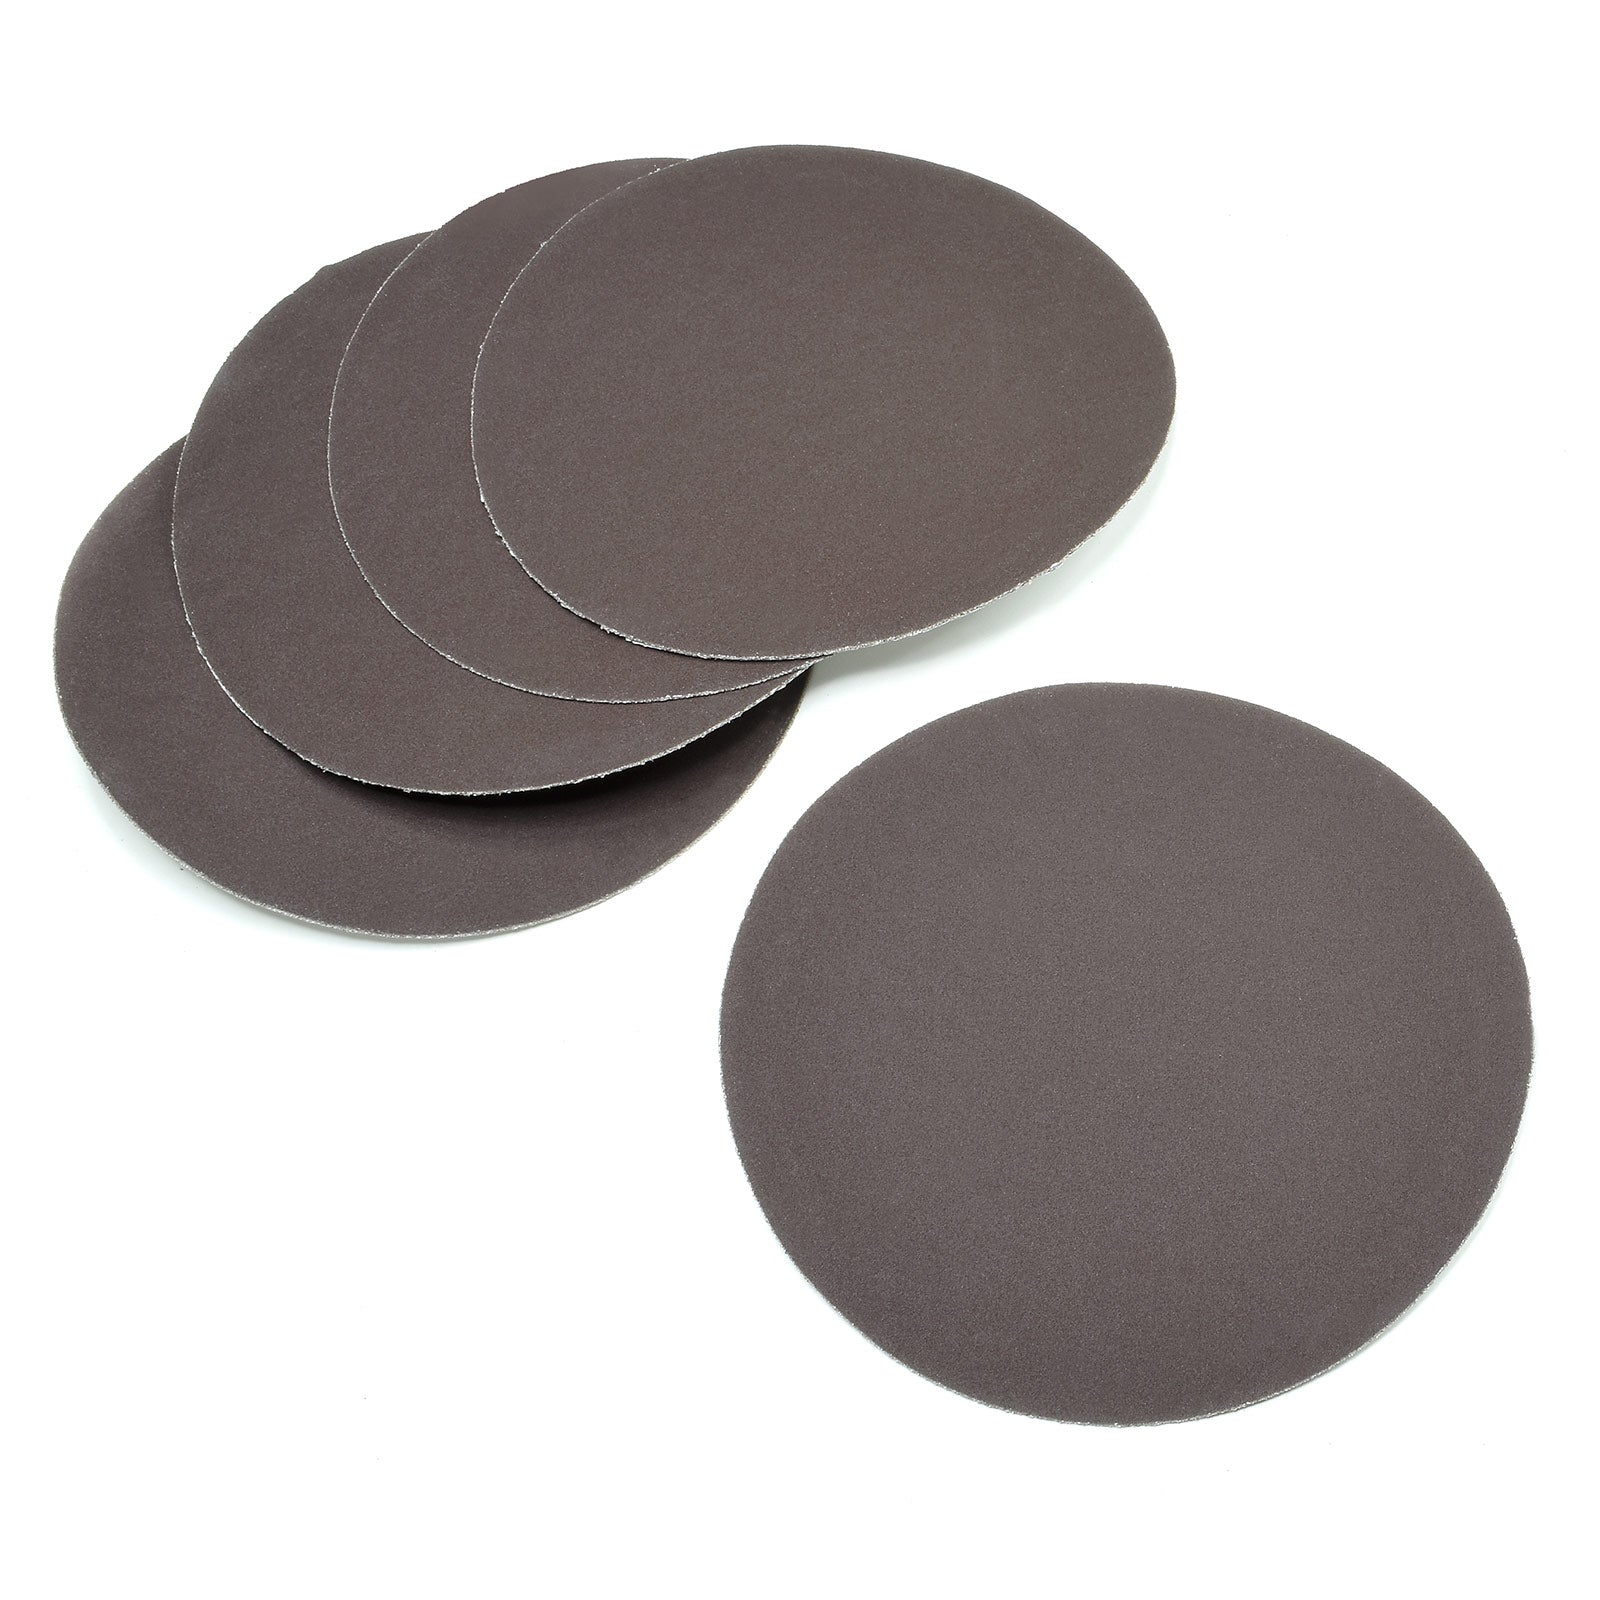 5" Sanding Disk, 320 Grit, Package of 5 - Micro - Mark Sandpaper & Sanding Sponges